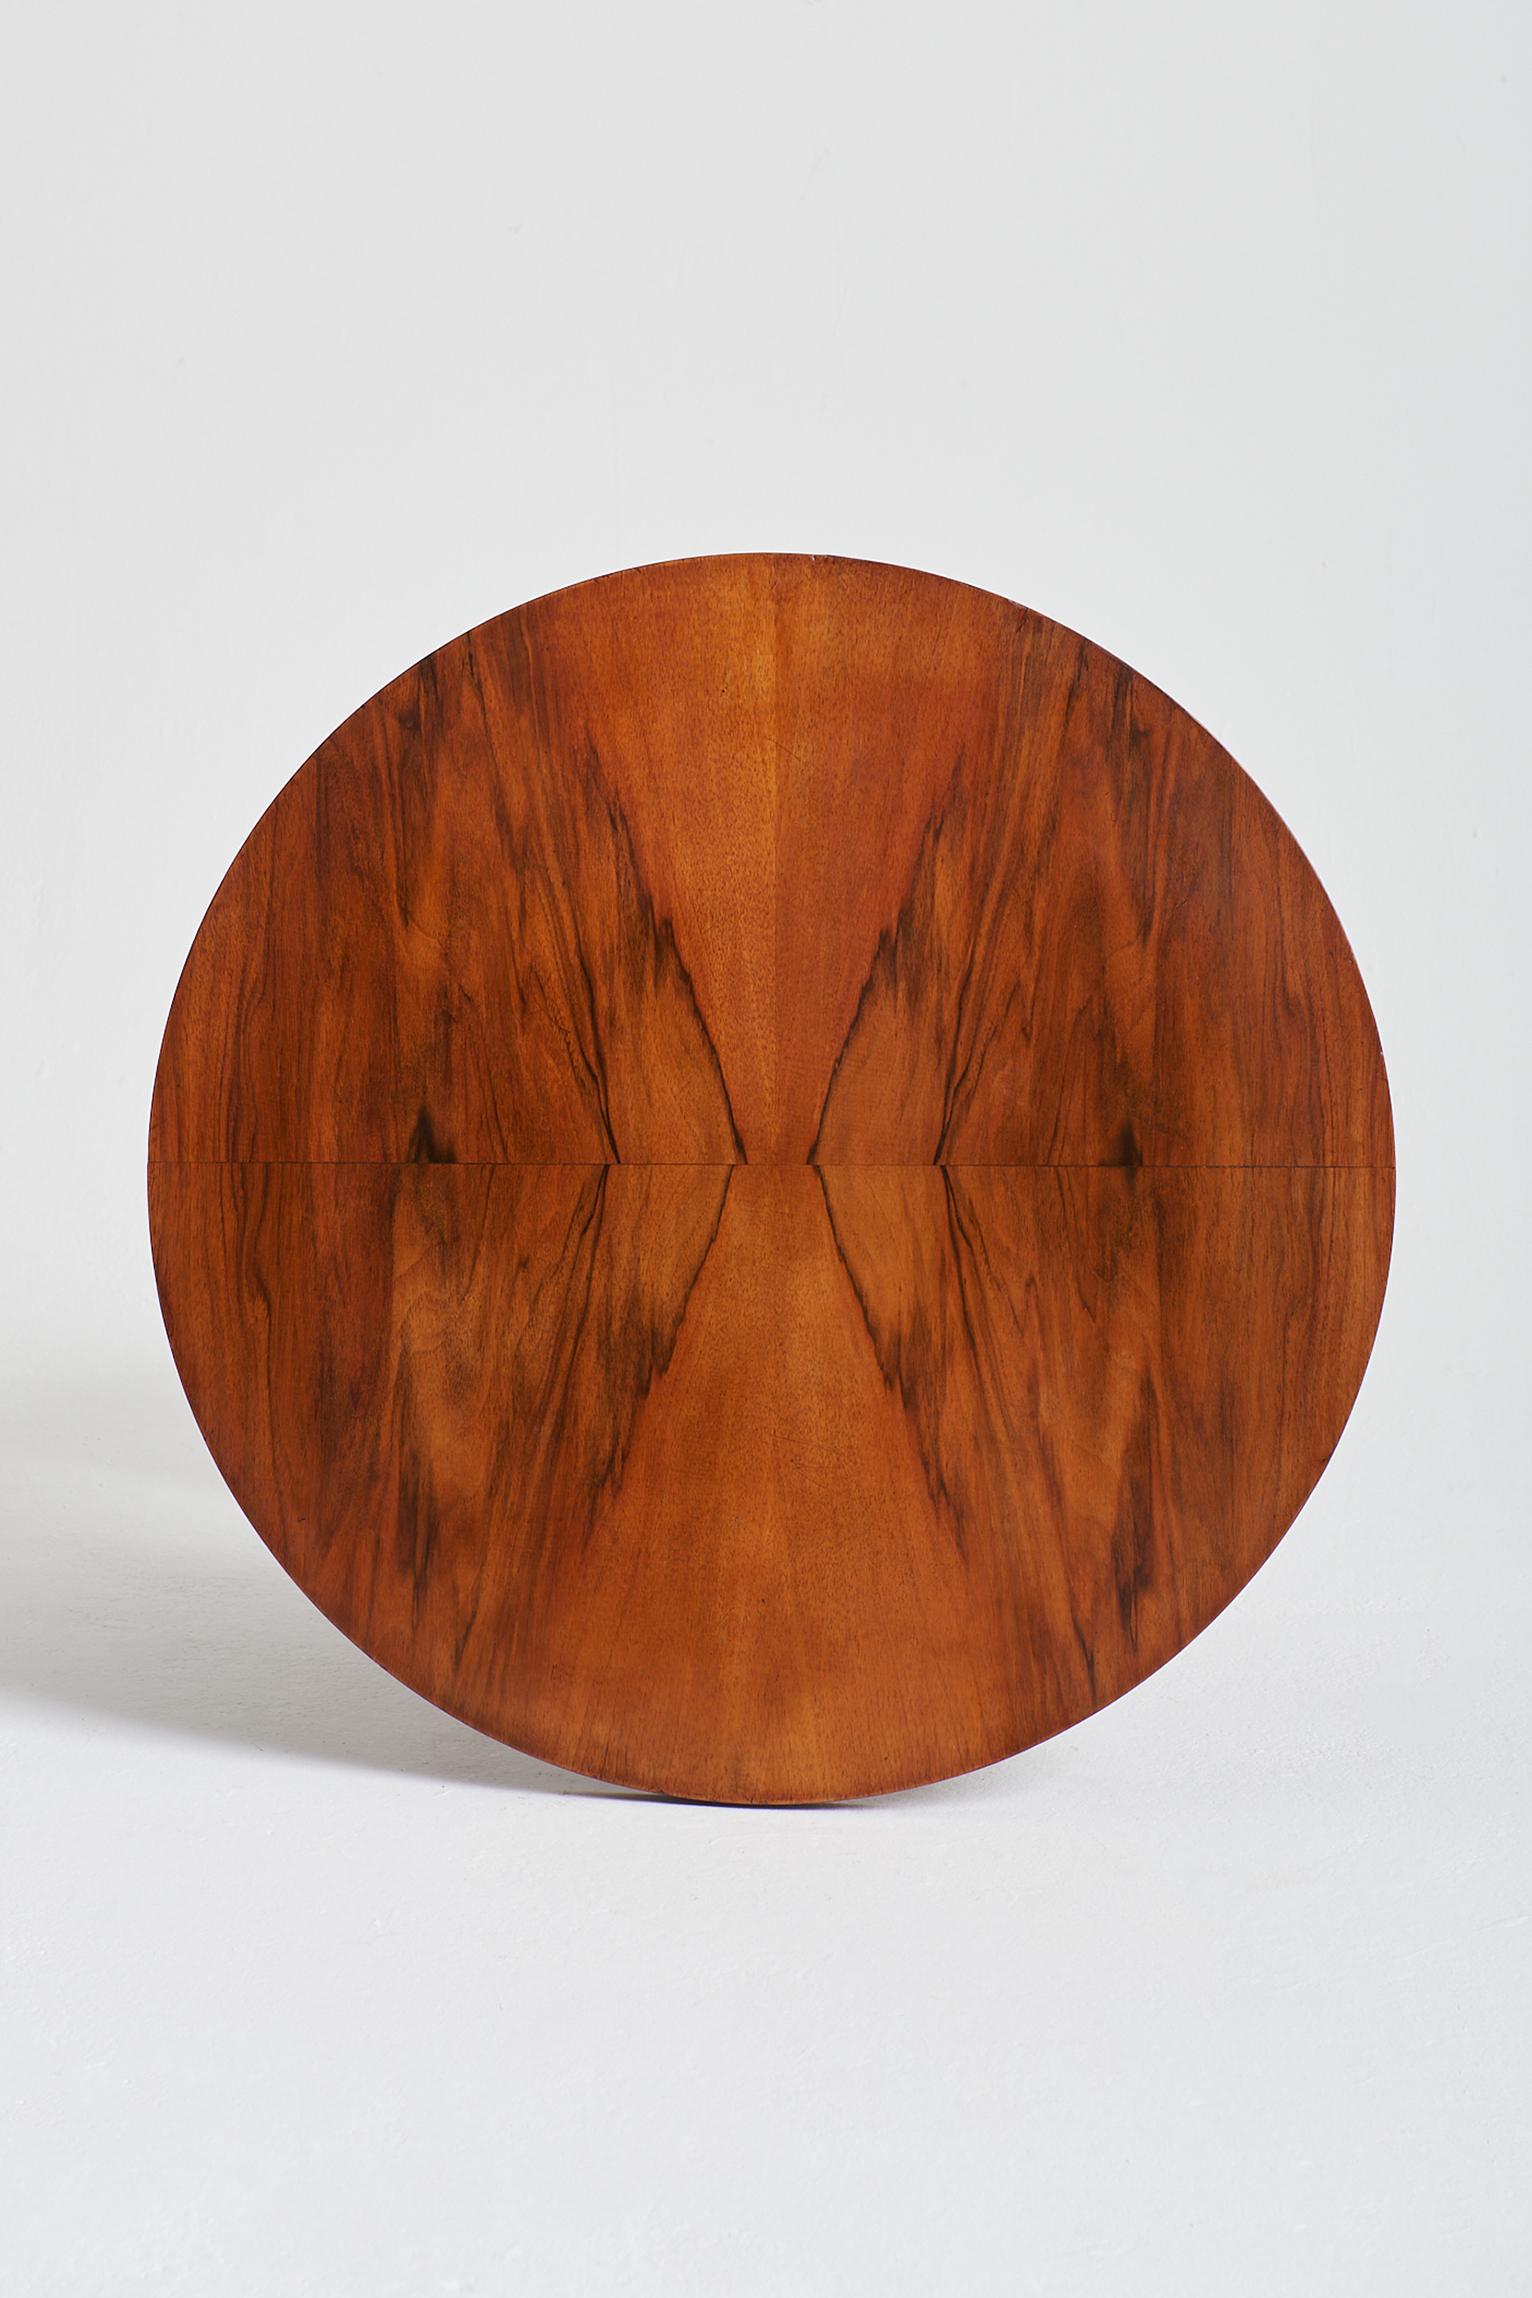 20th Century Art Deco Walnut Side Table